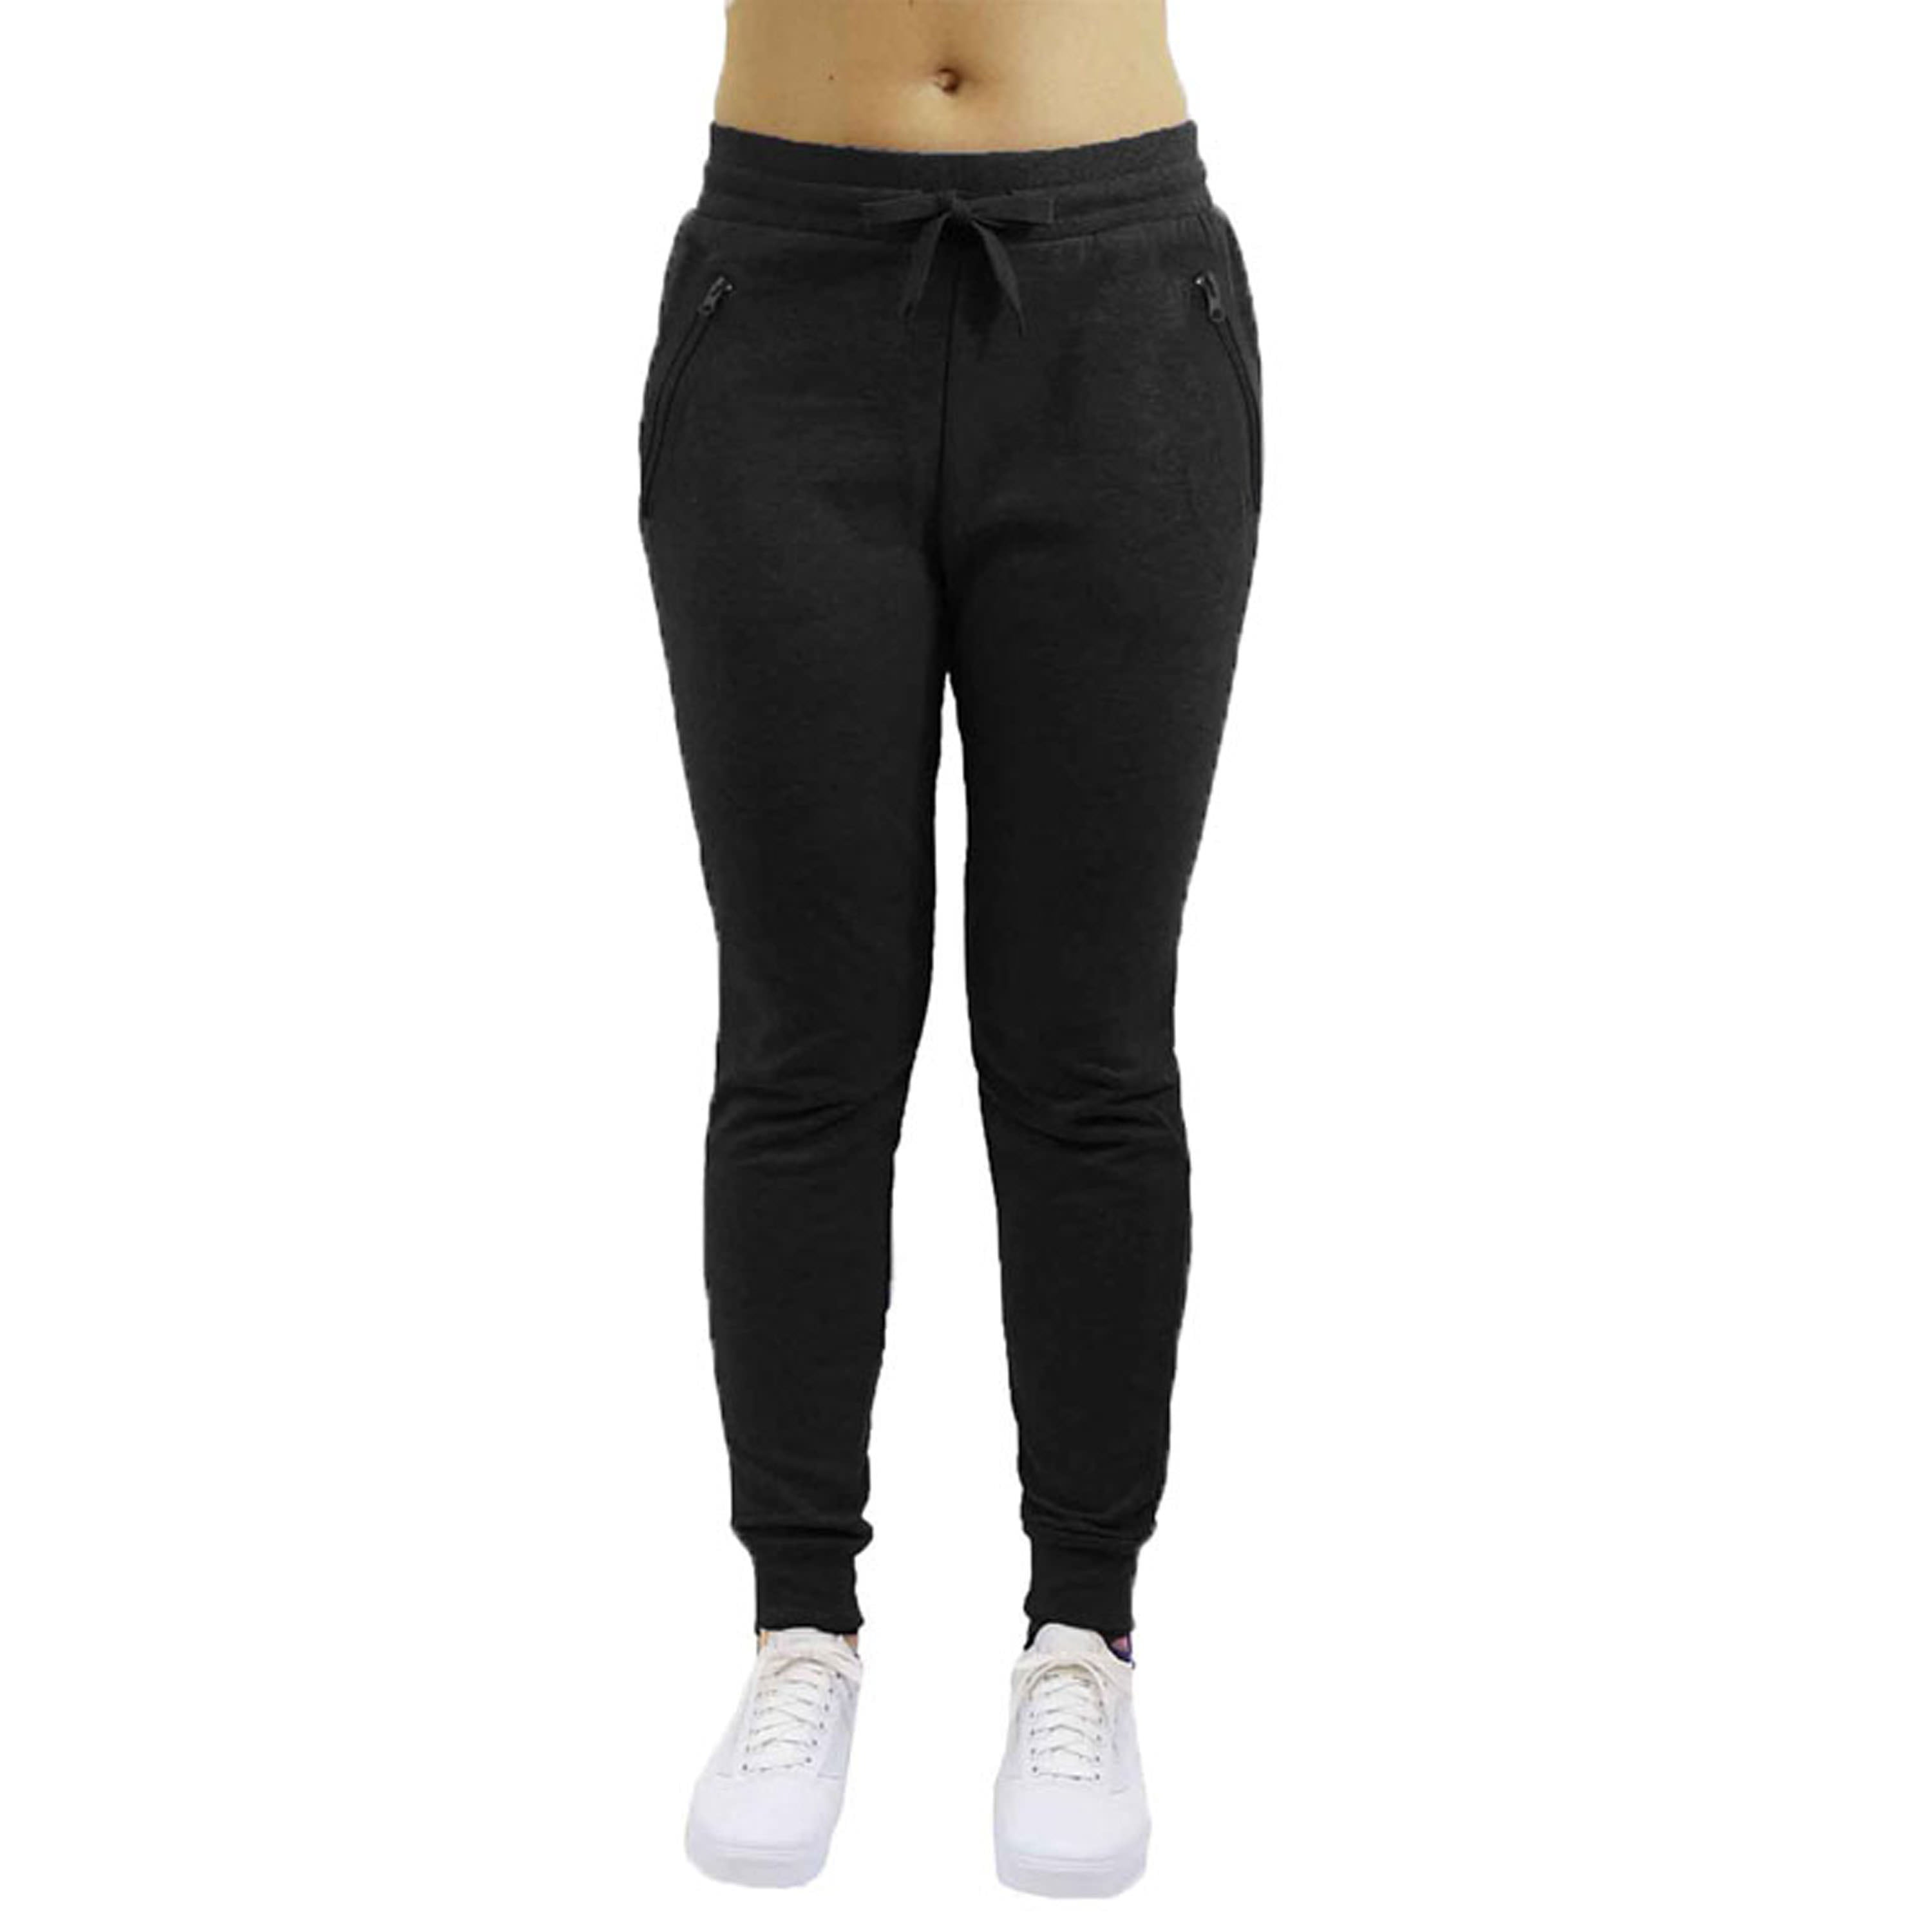 GBH - Women's Jogger Pants With Zipper Pockets - Walmart.com - Walmart.com